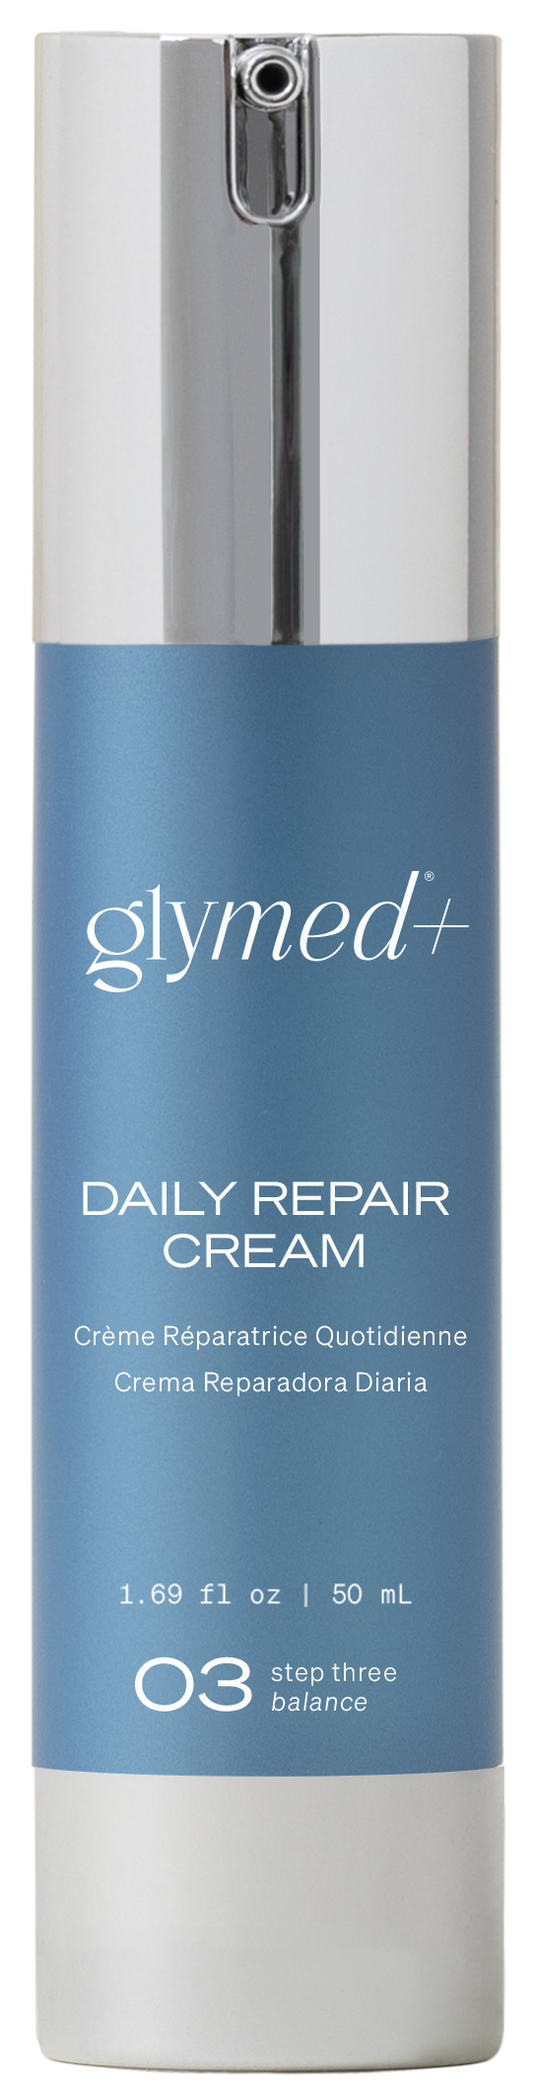 Daily Repair Cream